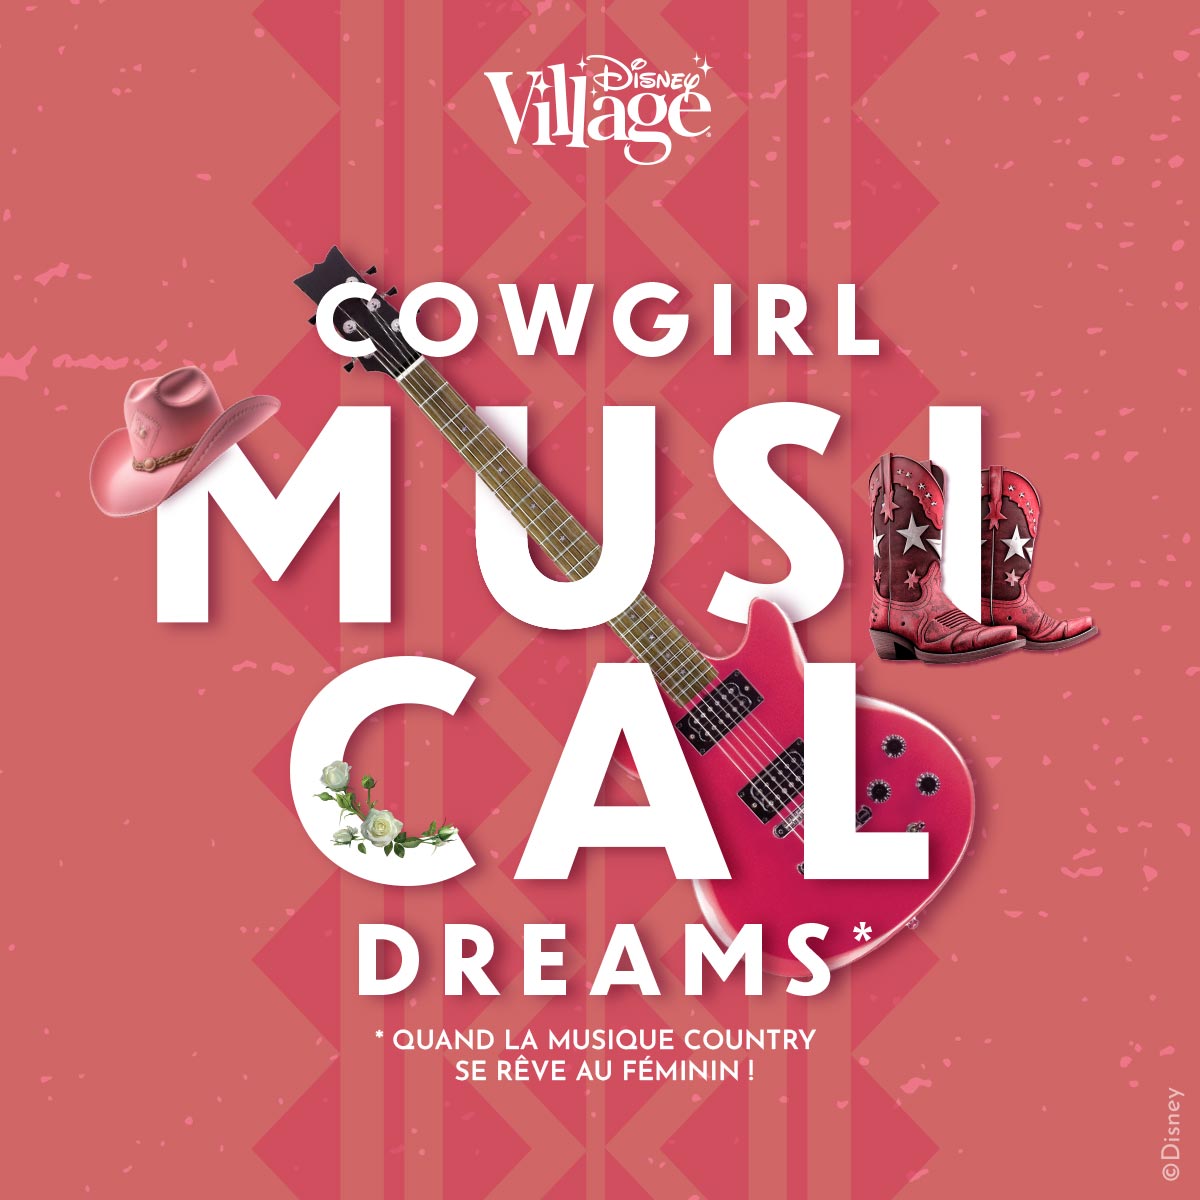 COWGIRL MUSICAL DREAMS AT DISNEY VILLAGE – Meet artists Justyna Kelley and Carlton Moody